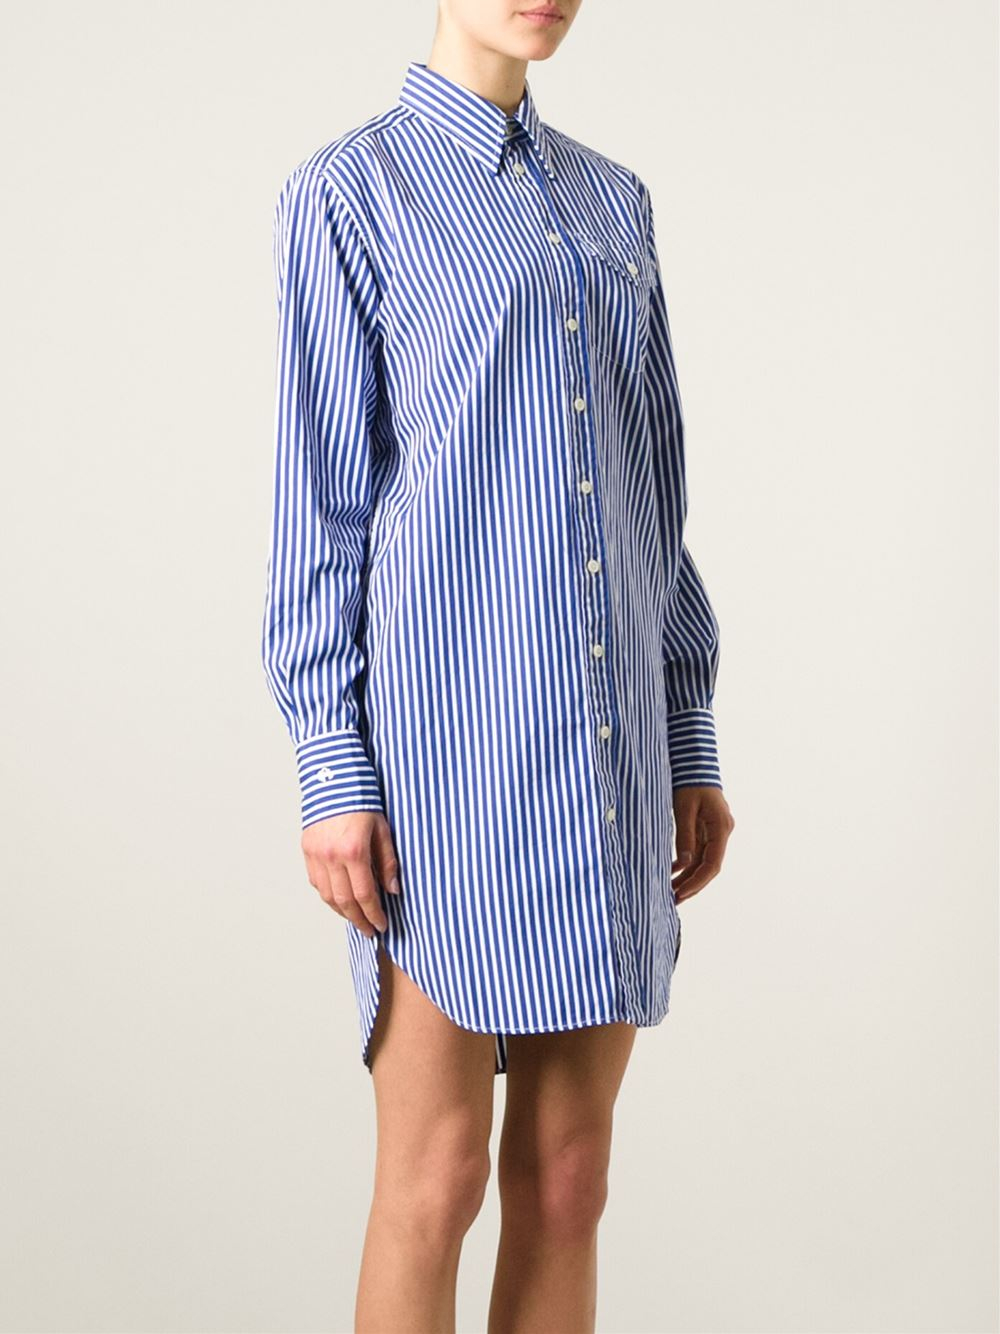 Polo ralph  lauren  Striped Shirt  Dress  in Blue white  Lyst